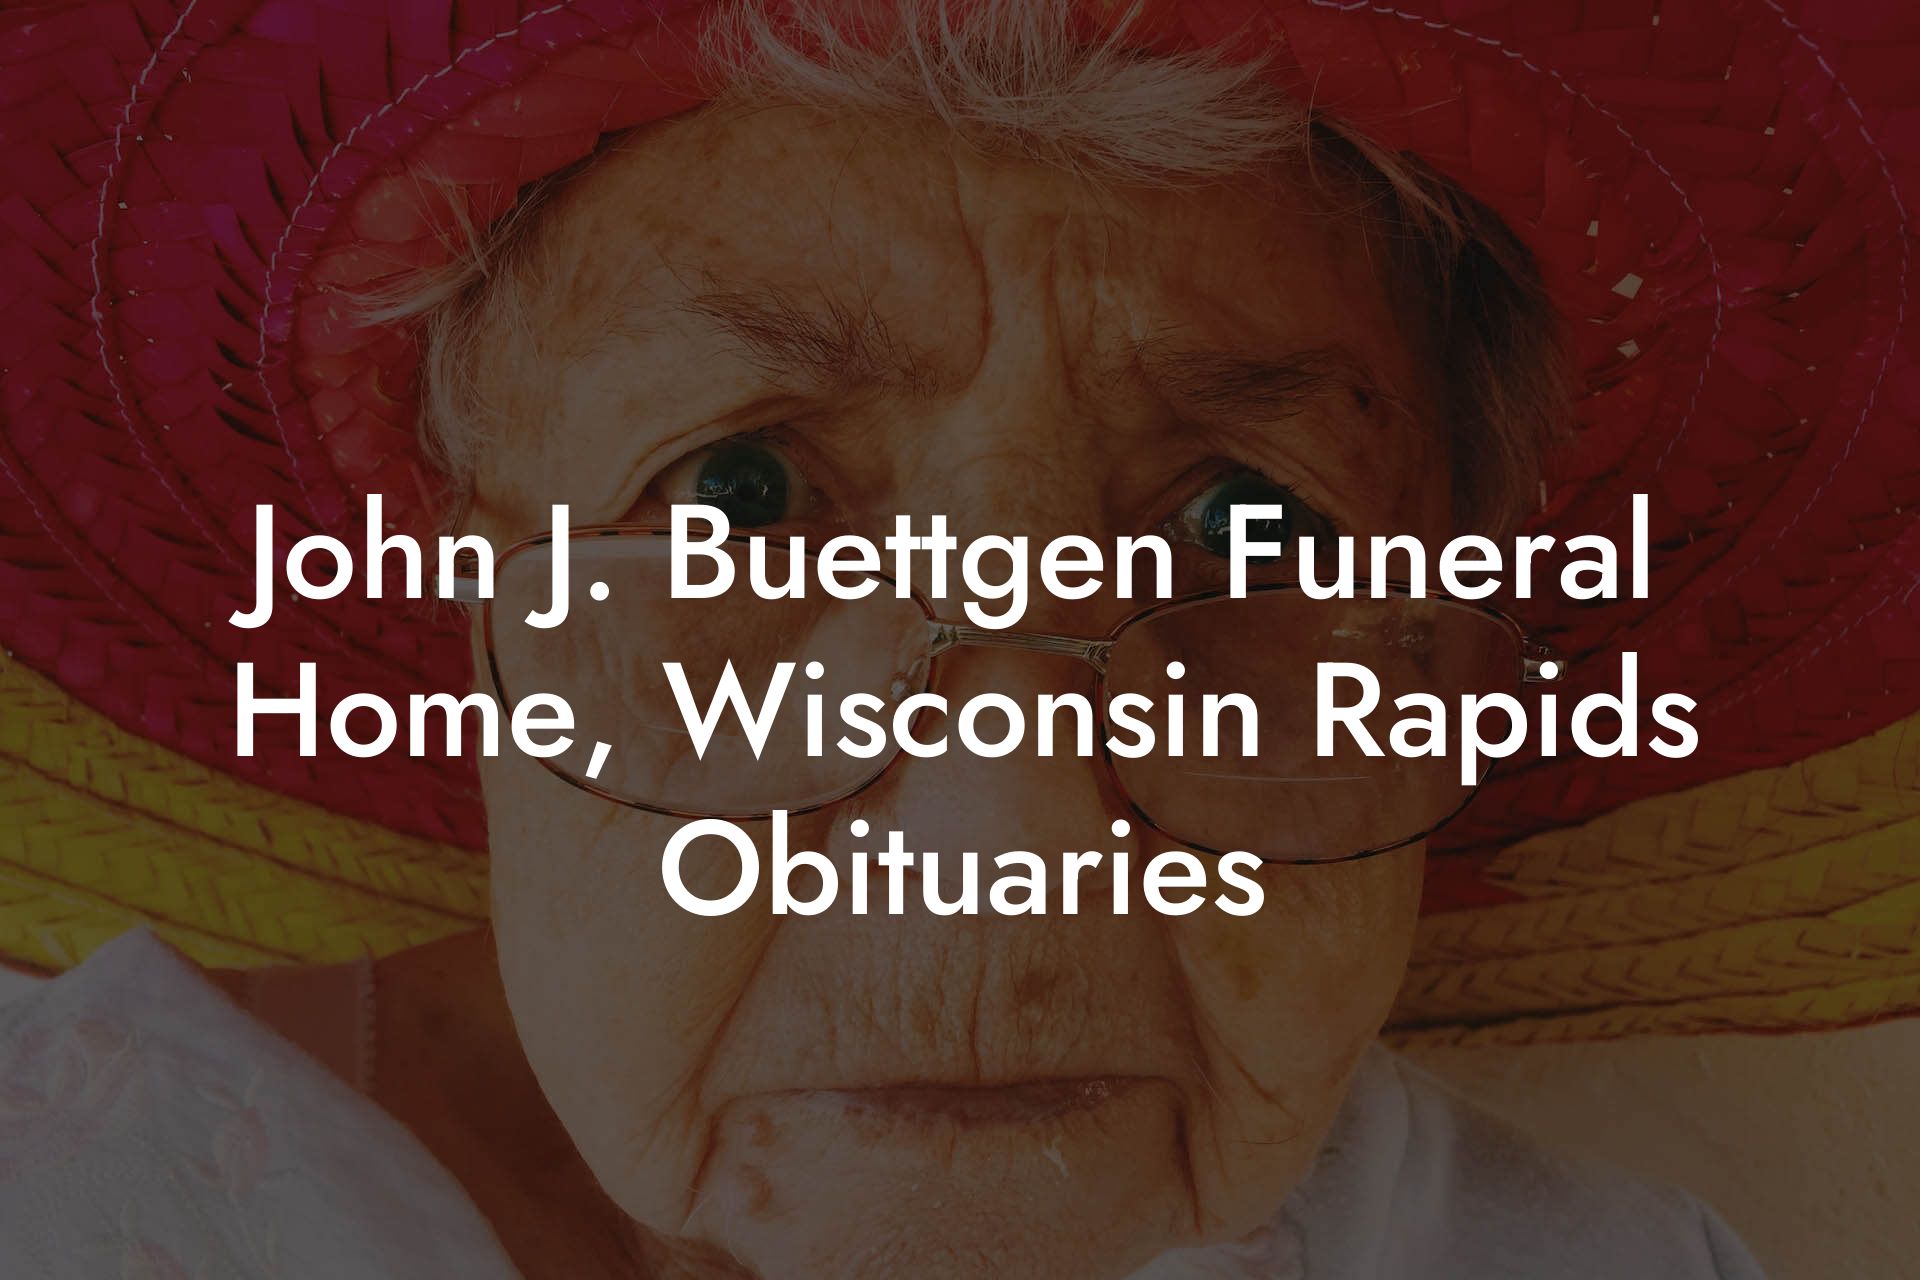 John J. Buettgen Funeral Home, Wisconsin Rapids Obituaries